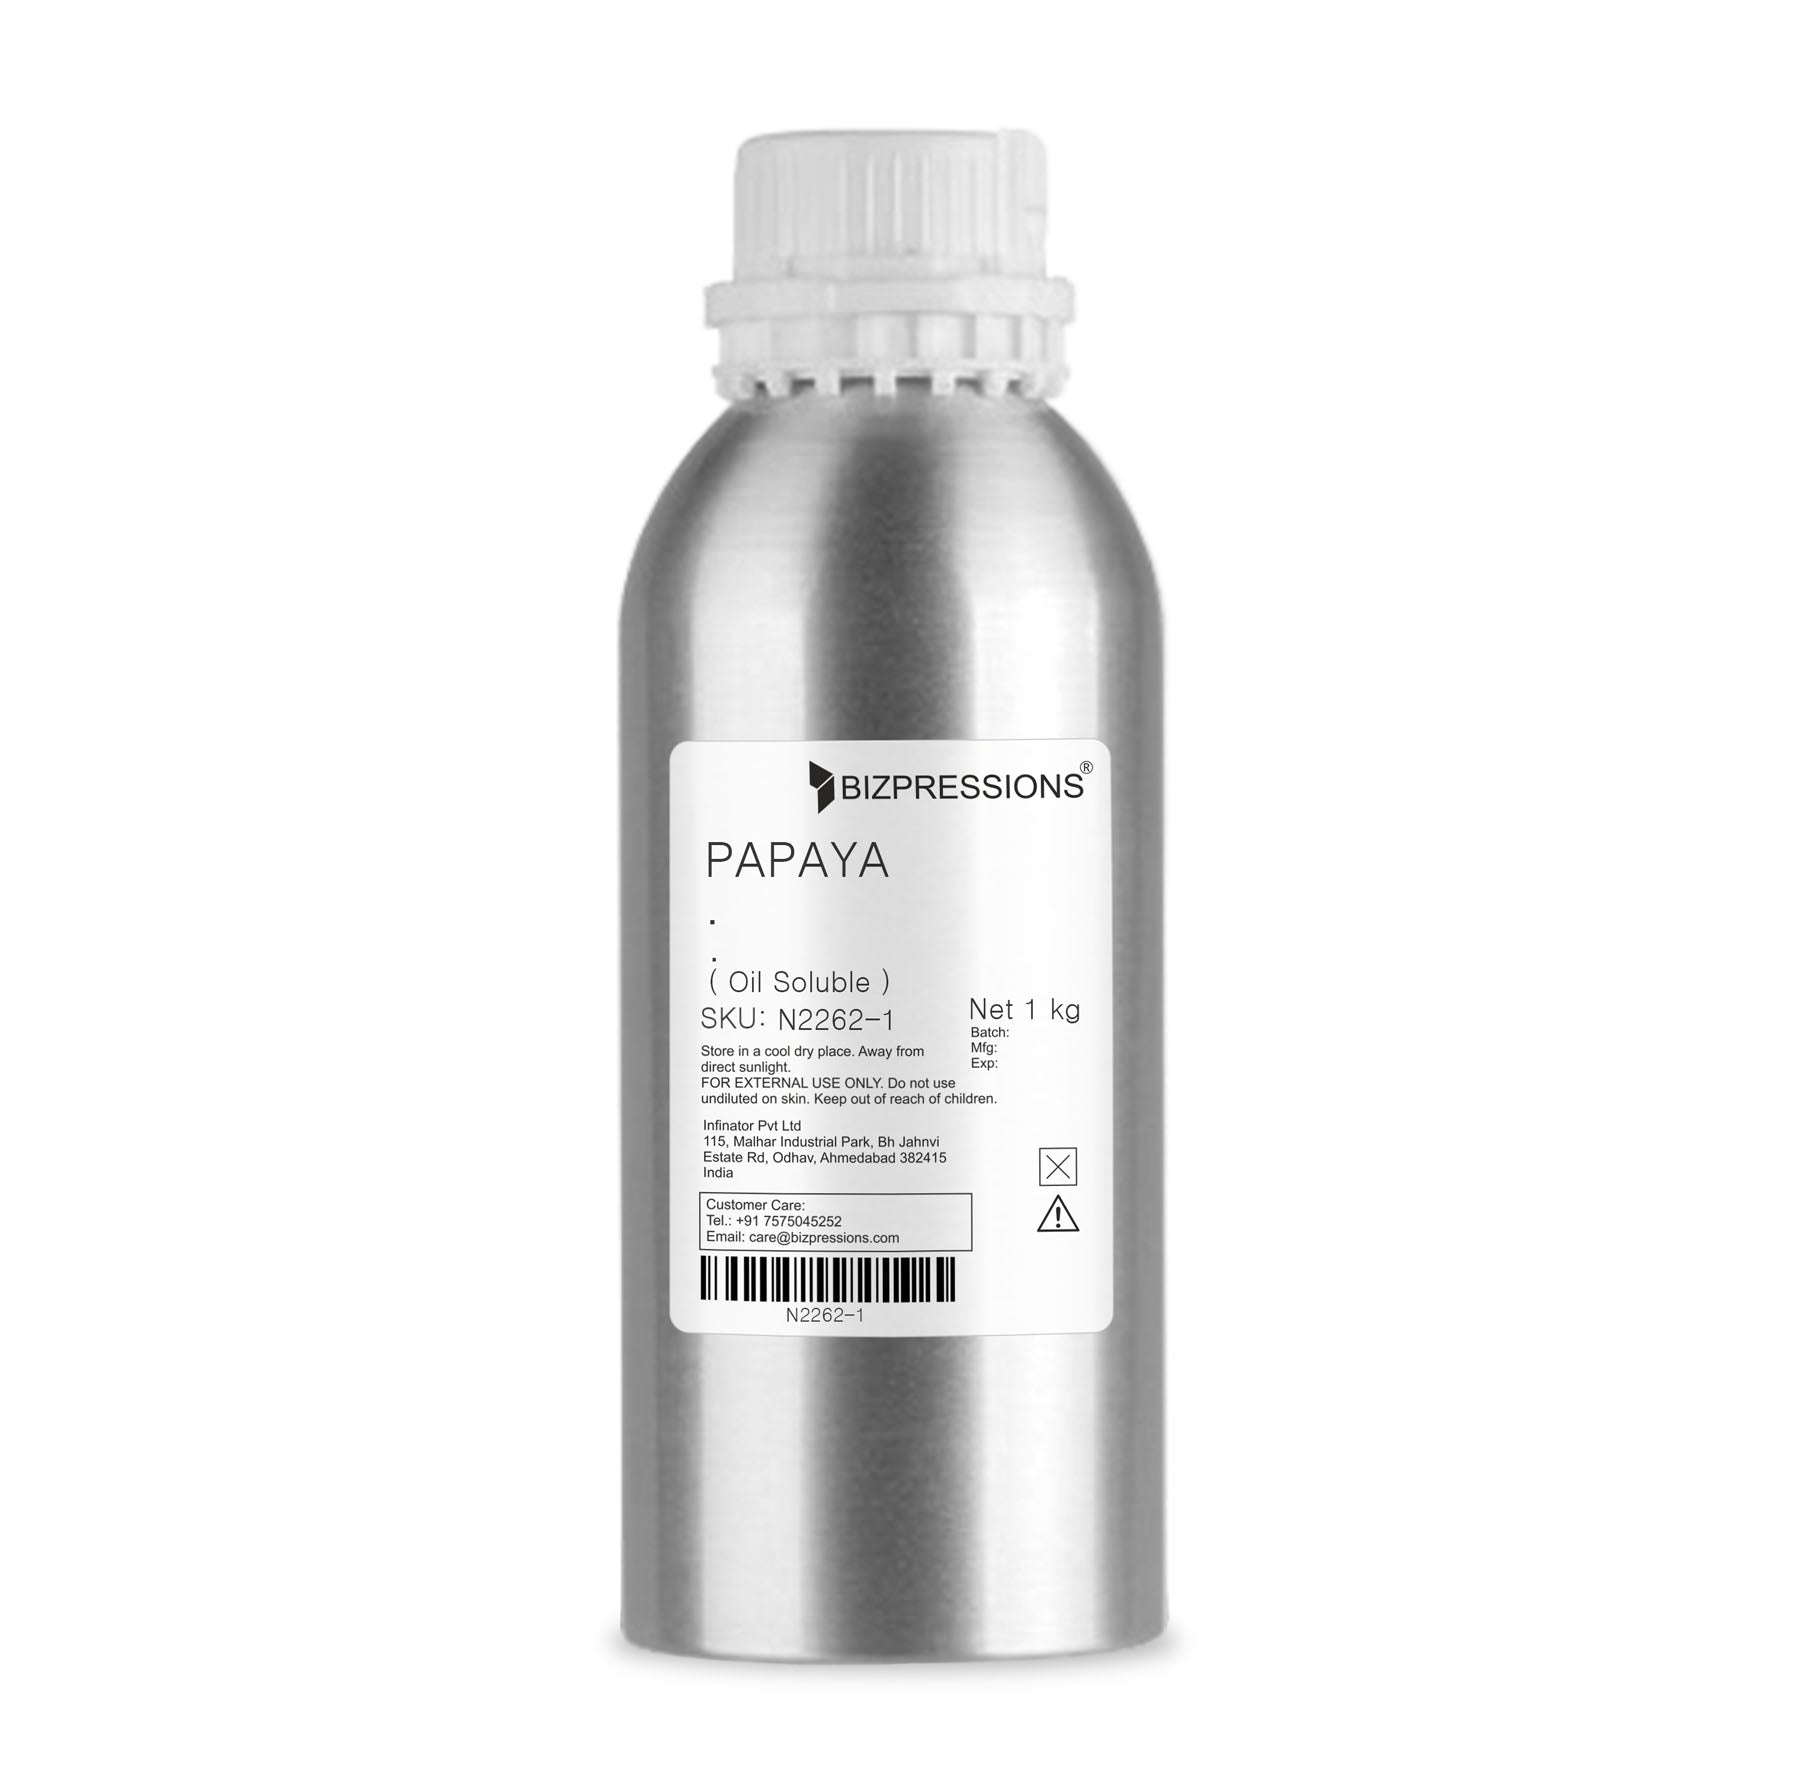 PAPAYA - Fragrance ( Oil Soluble ) - 1 kg